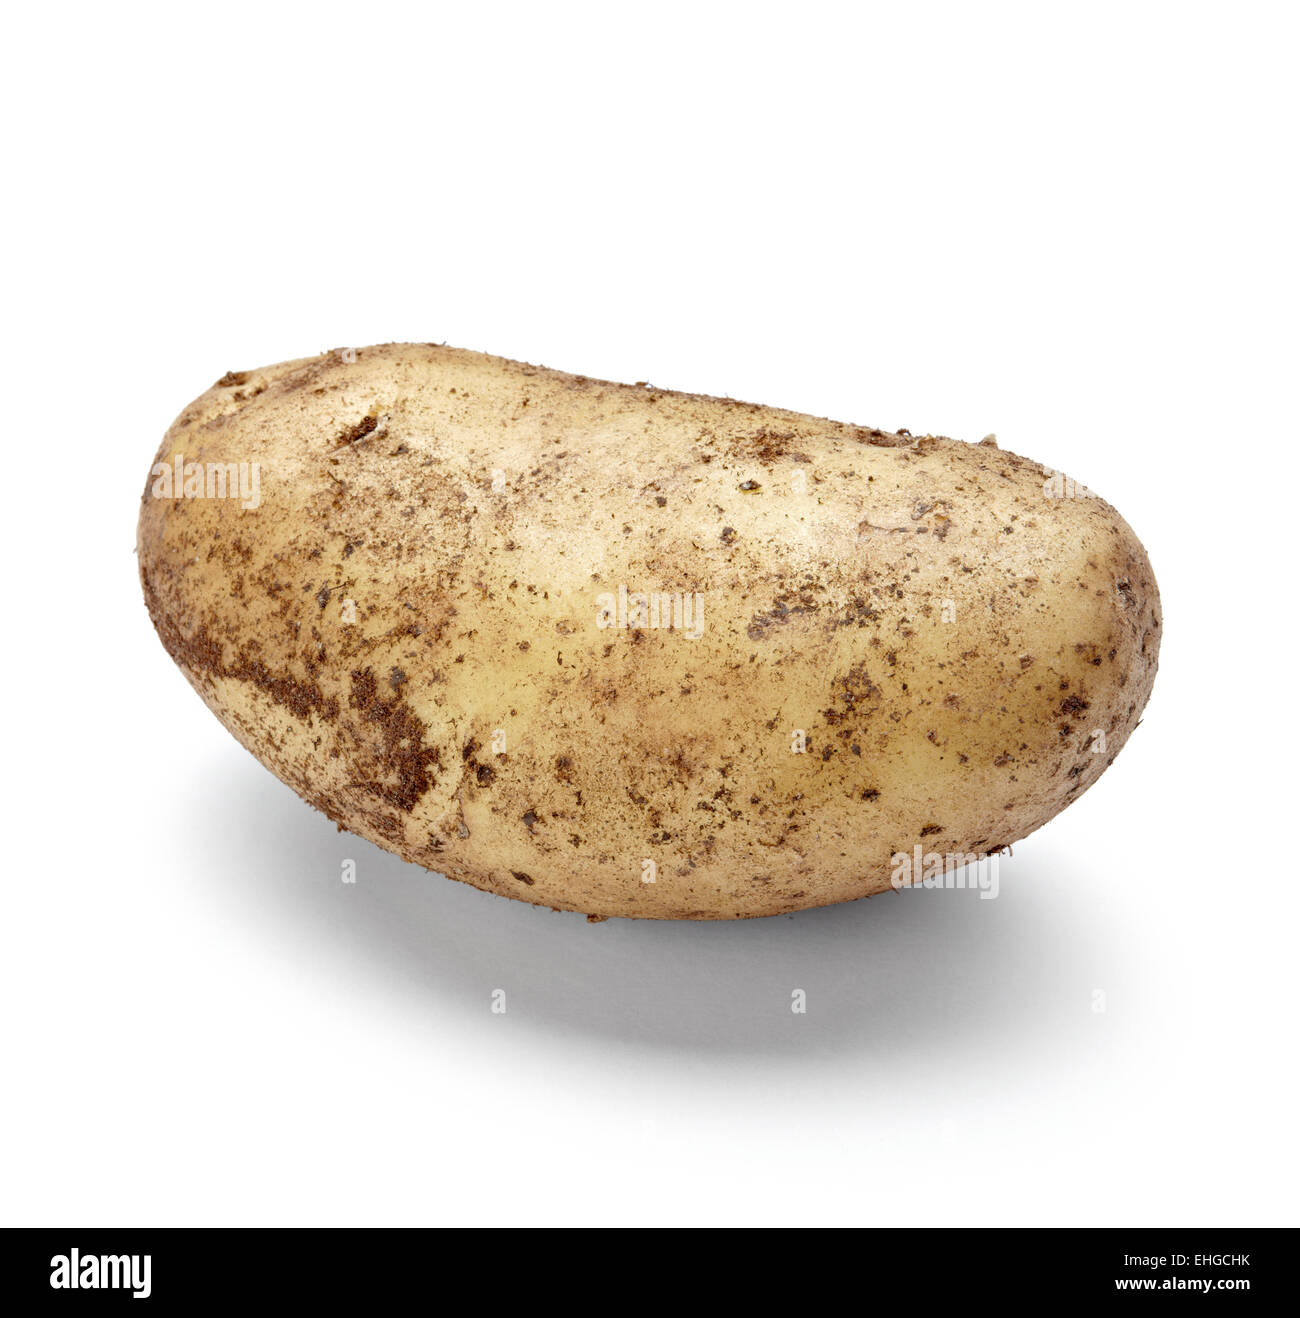 potato vegetable food Stock Photo